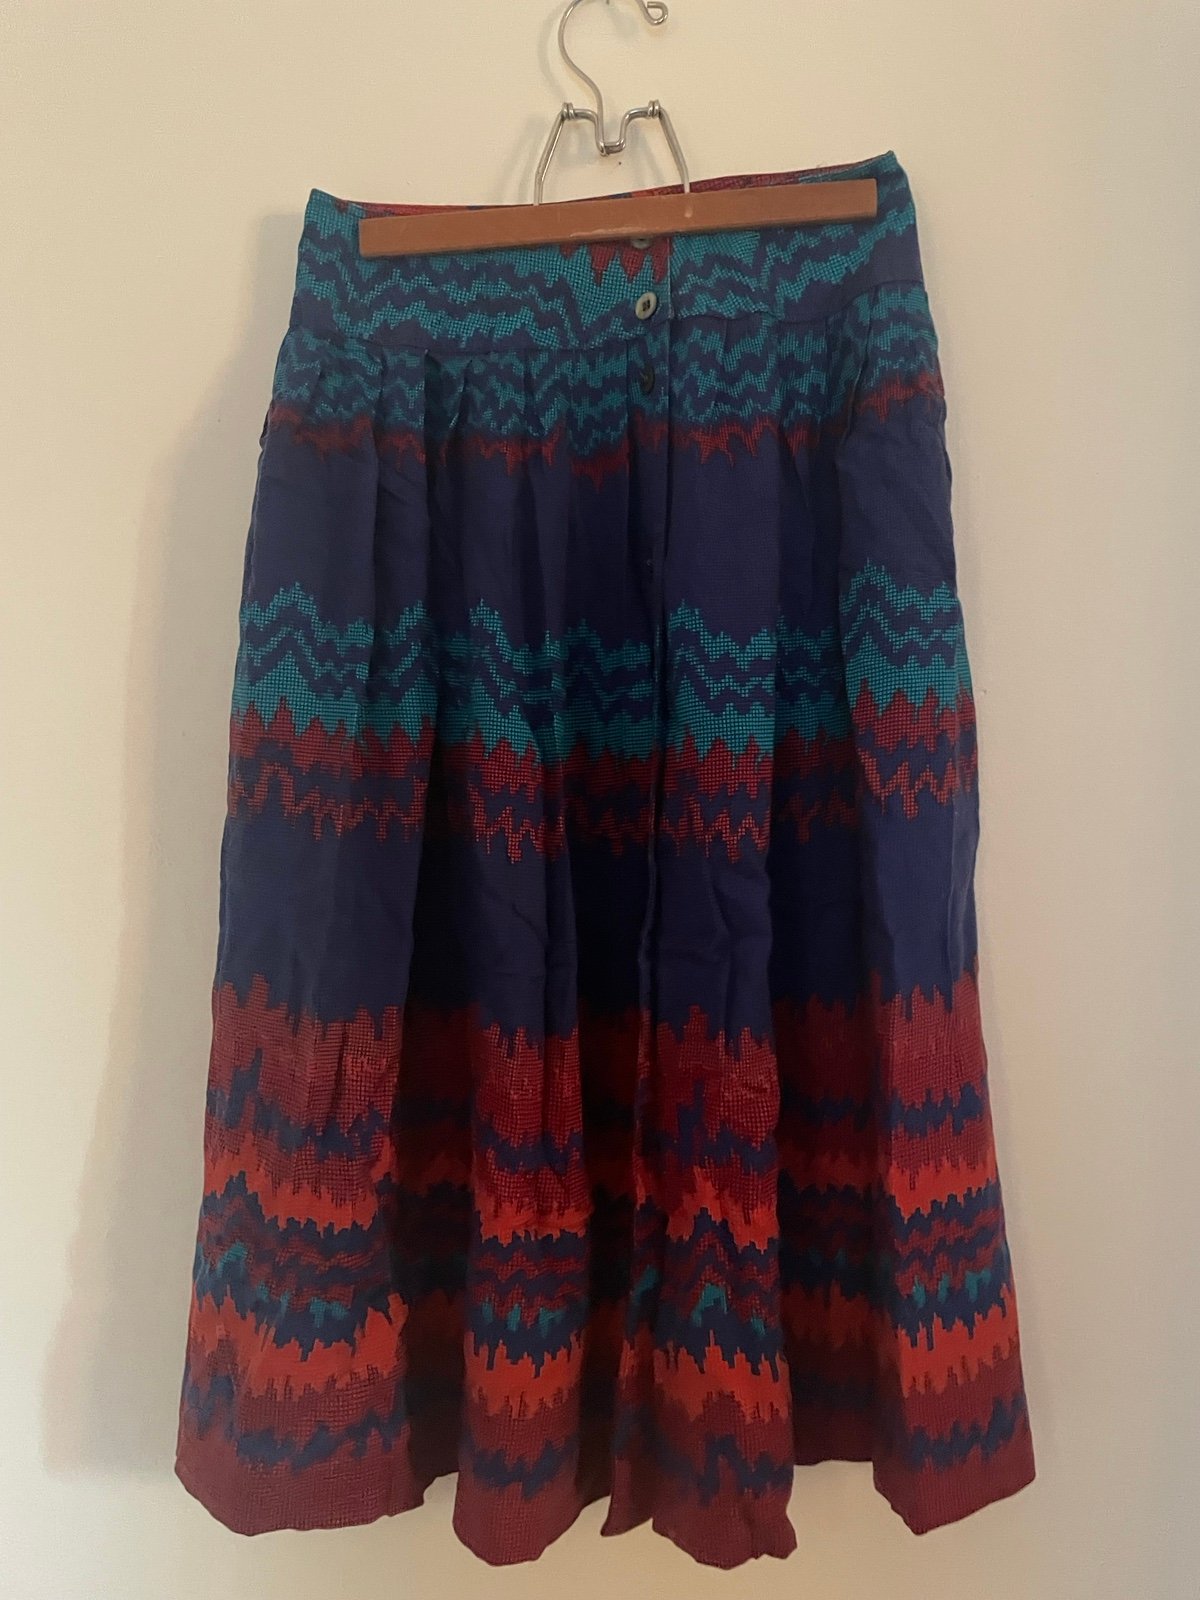 big discount Vintage Liz Claiborne Skirt N5EDMu2Og Onli